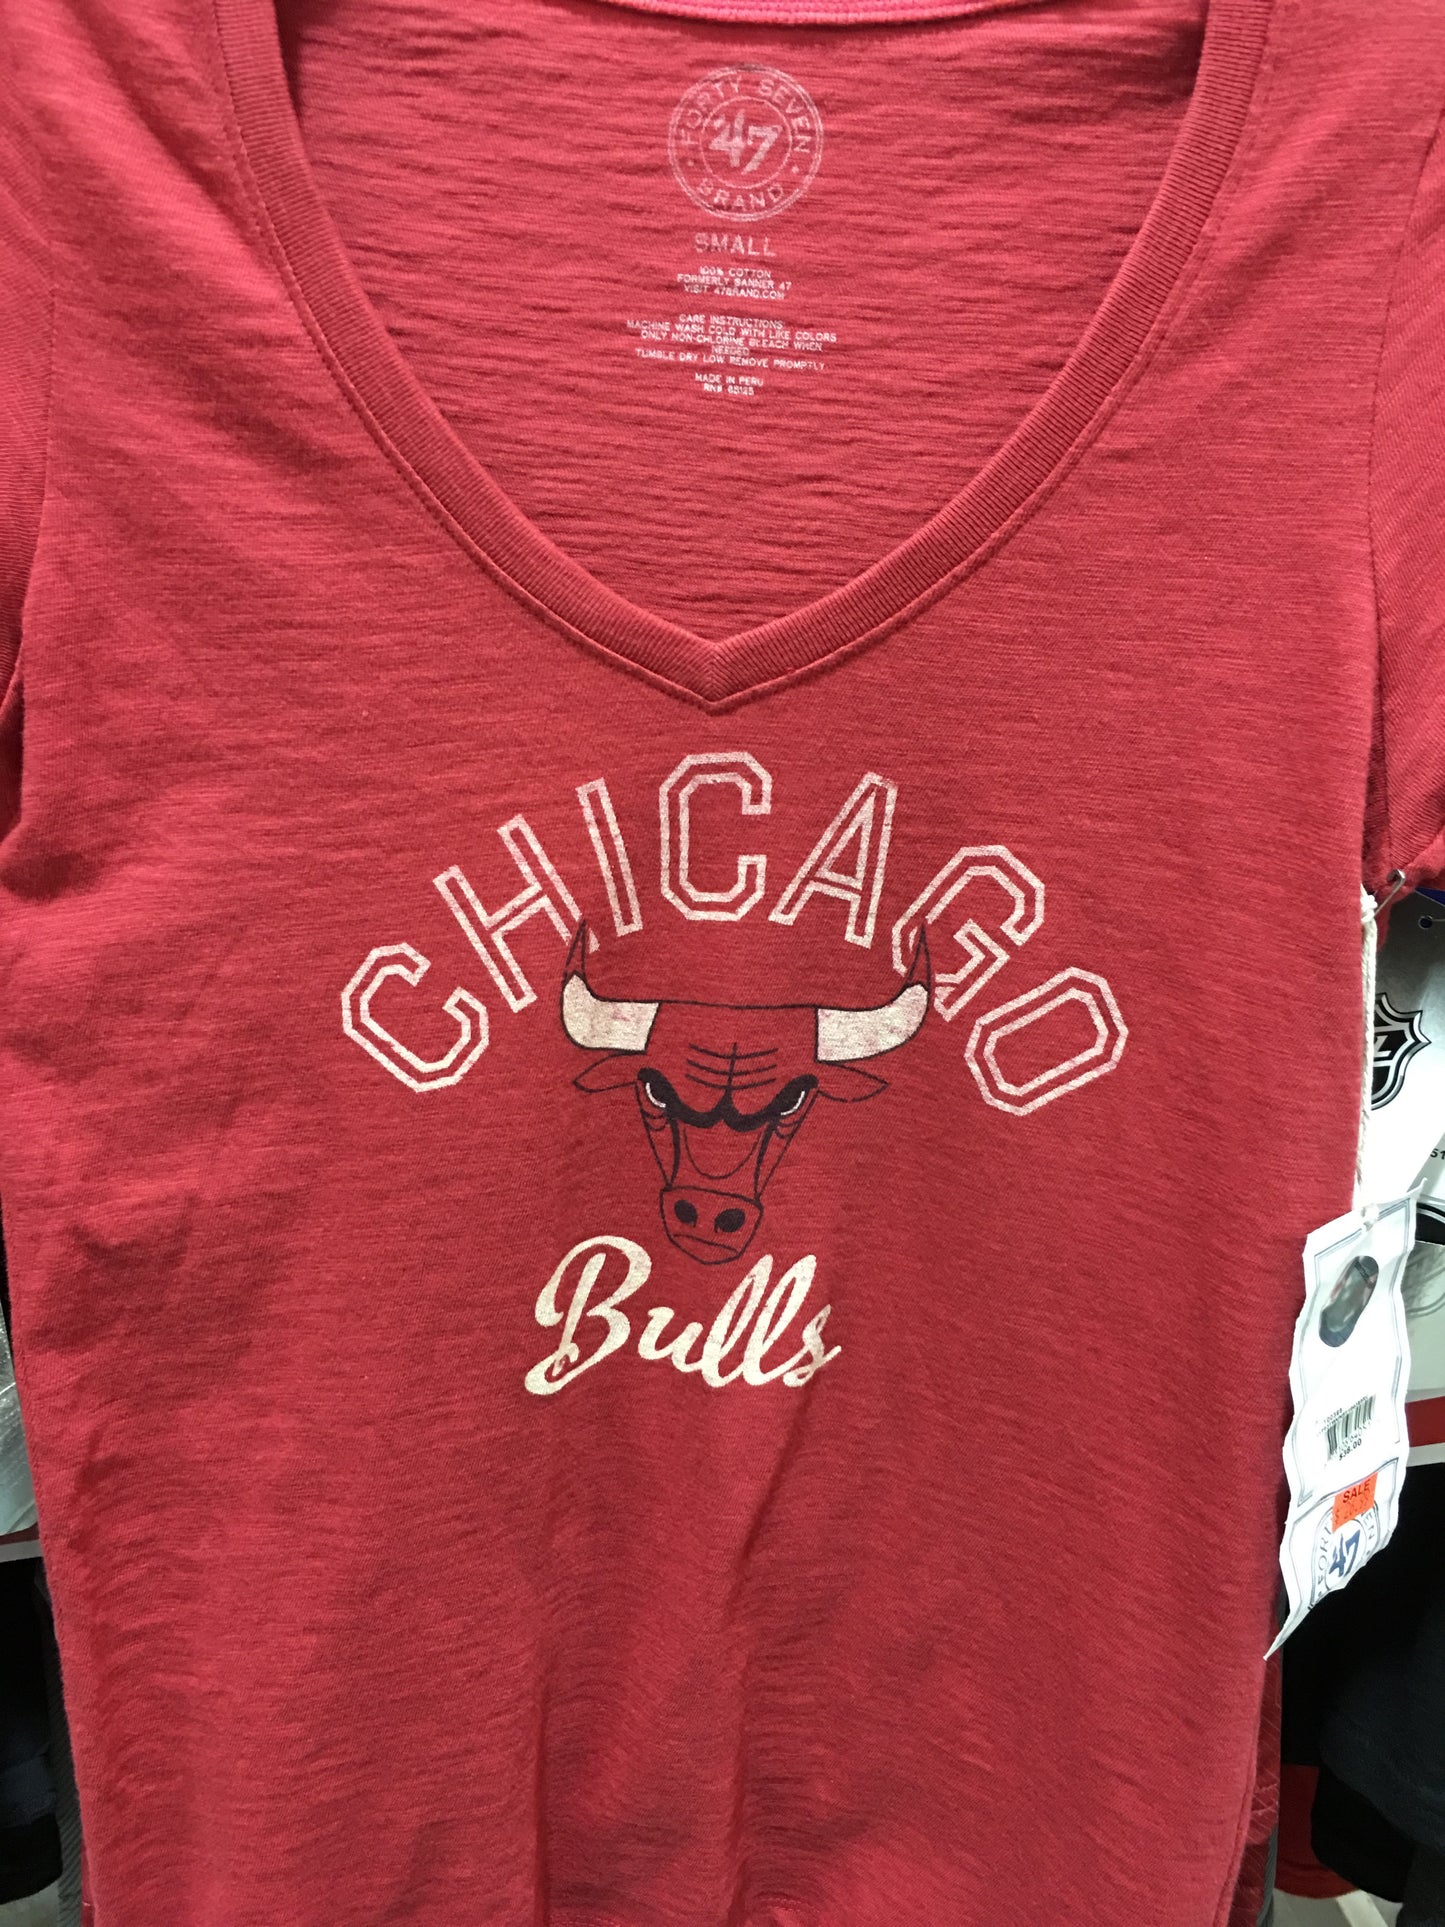 Womens Chicago Bulls Rescue V-Neck Scrum T-Shirt